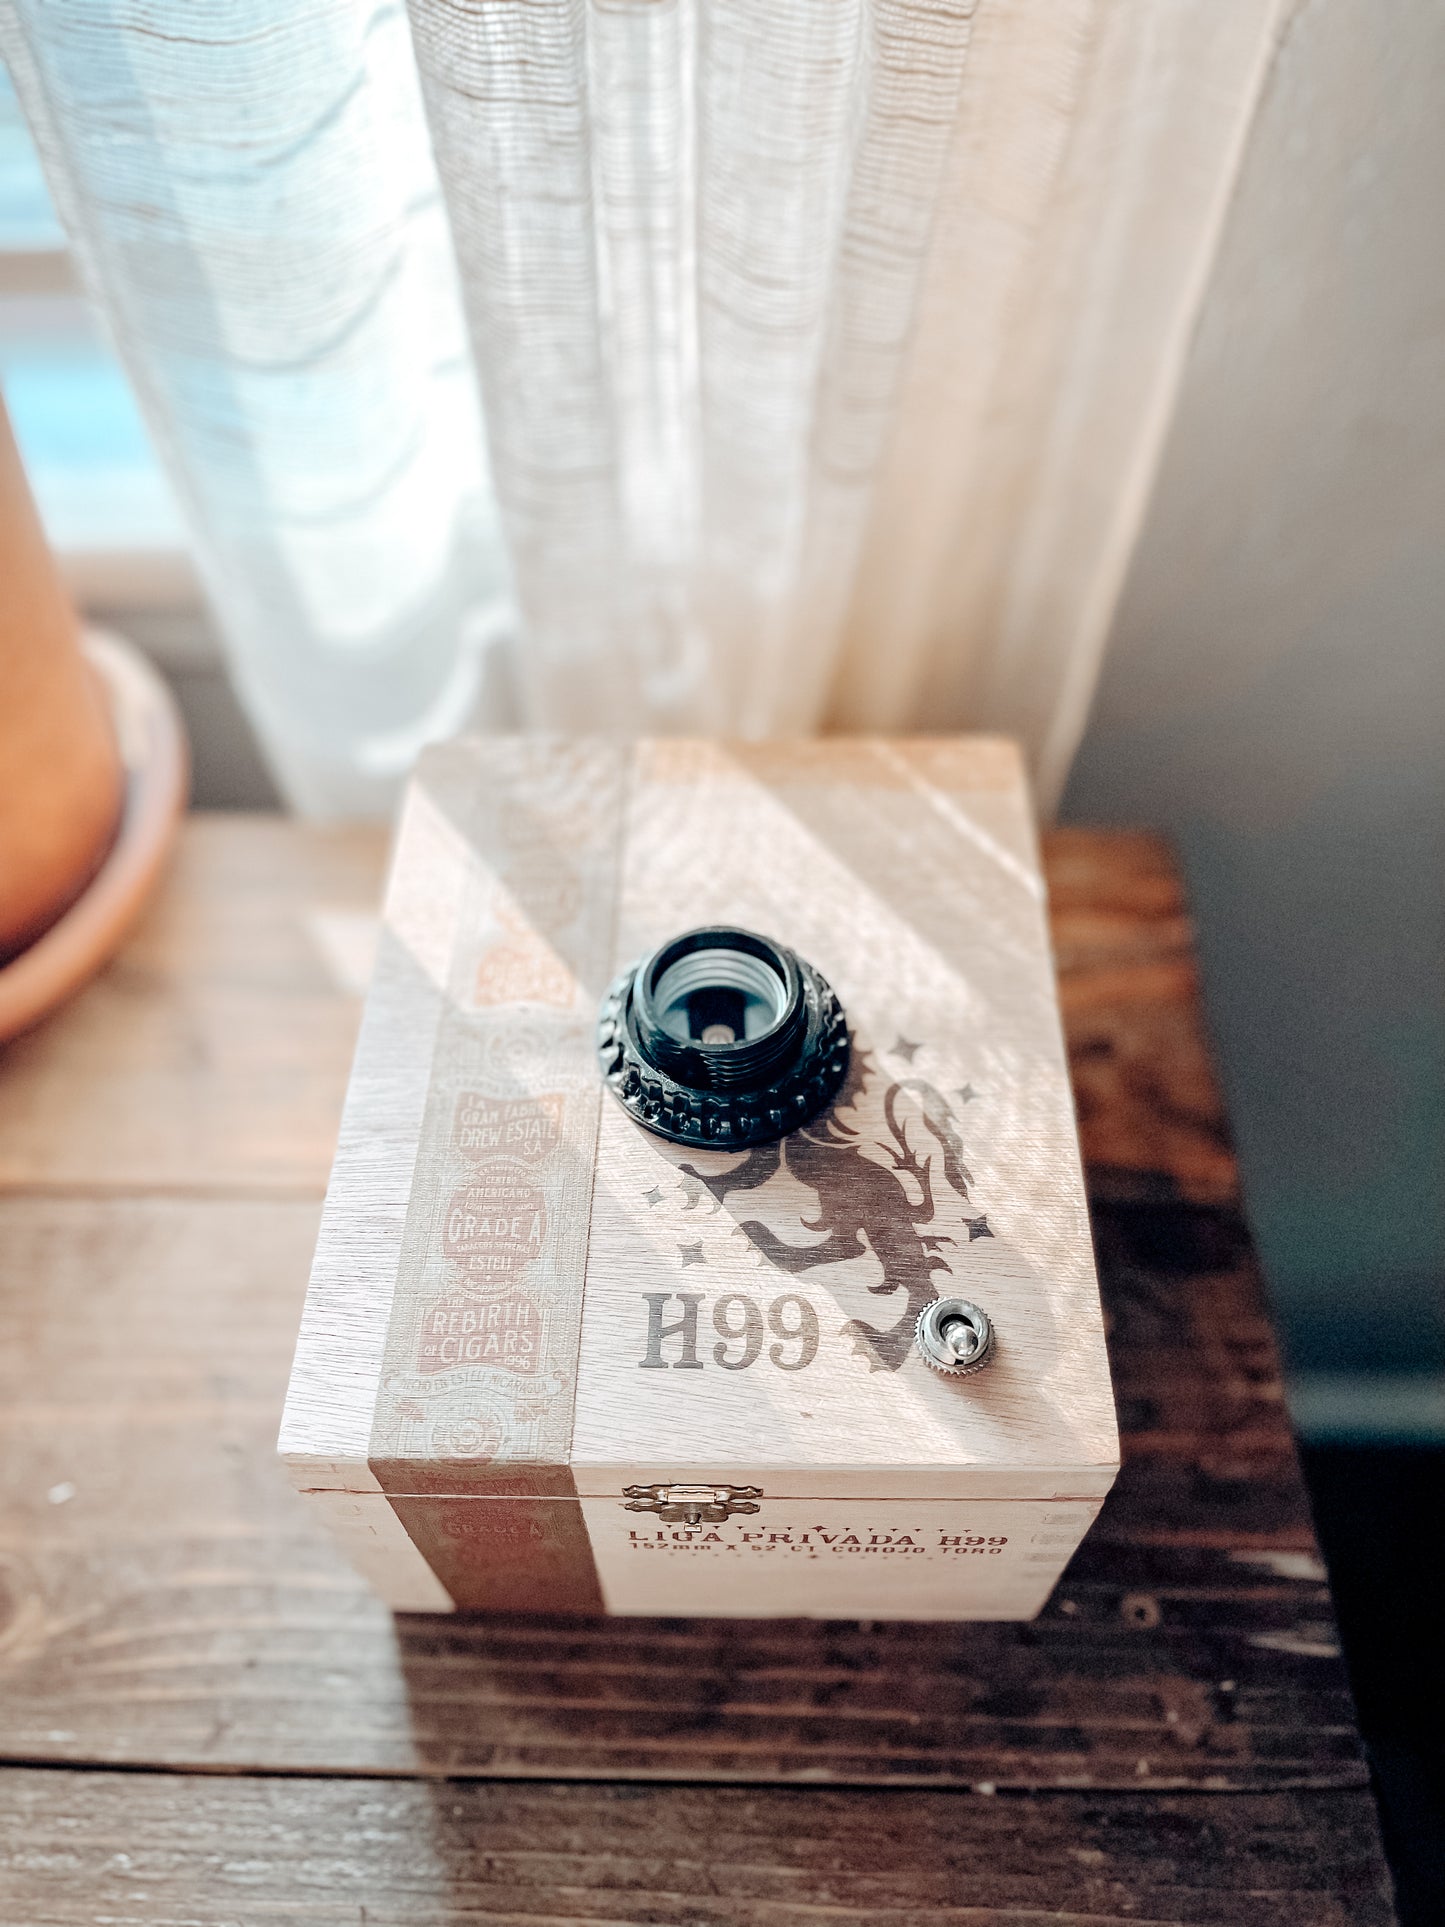 Cigar Box Lamp - DE Liga Privada H99